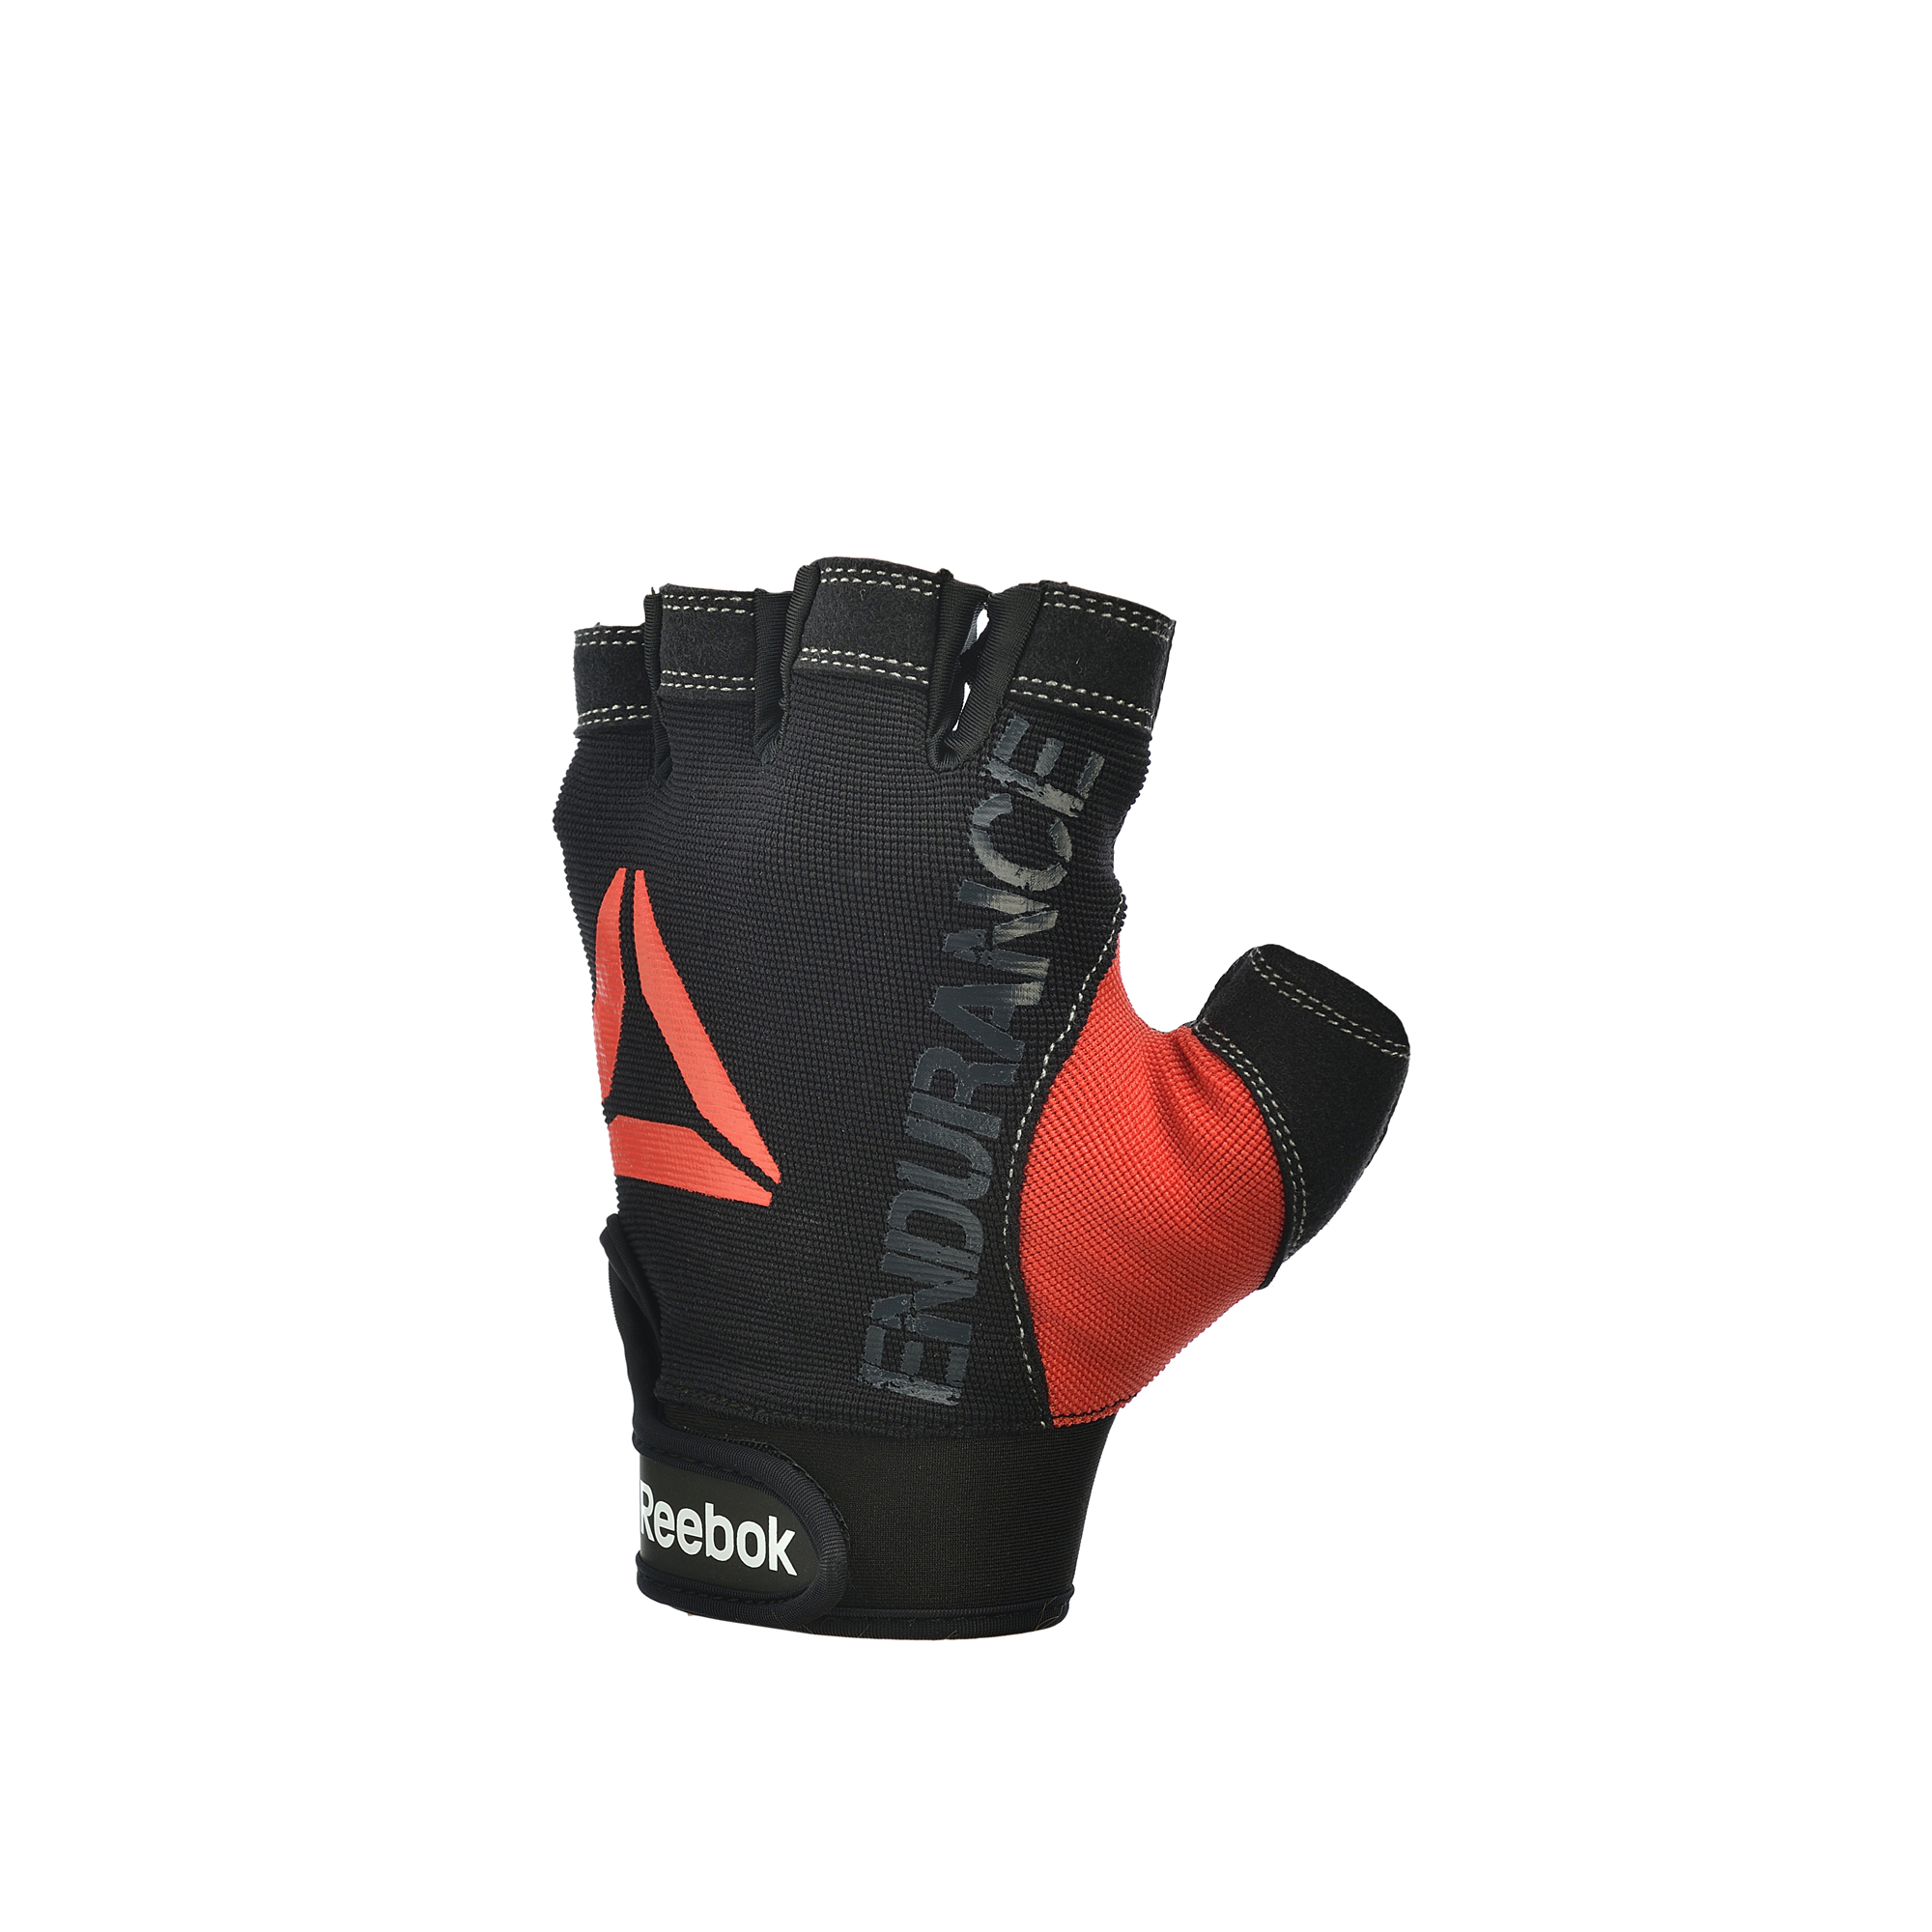 Reebok Strength Gloves - Black & Red